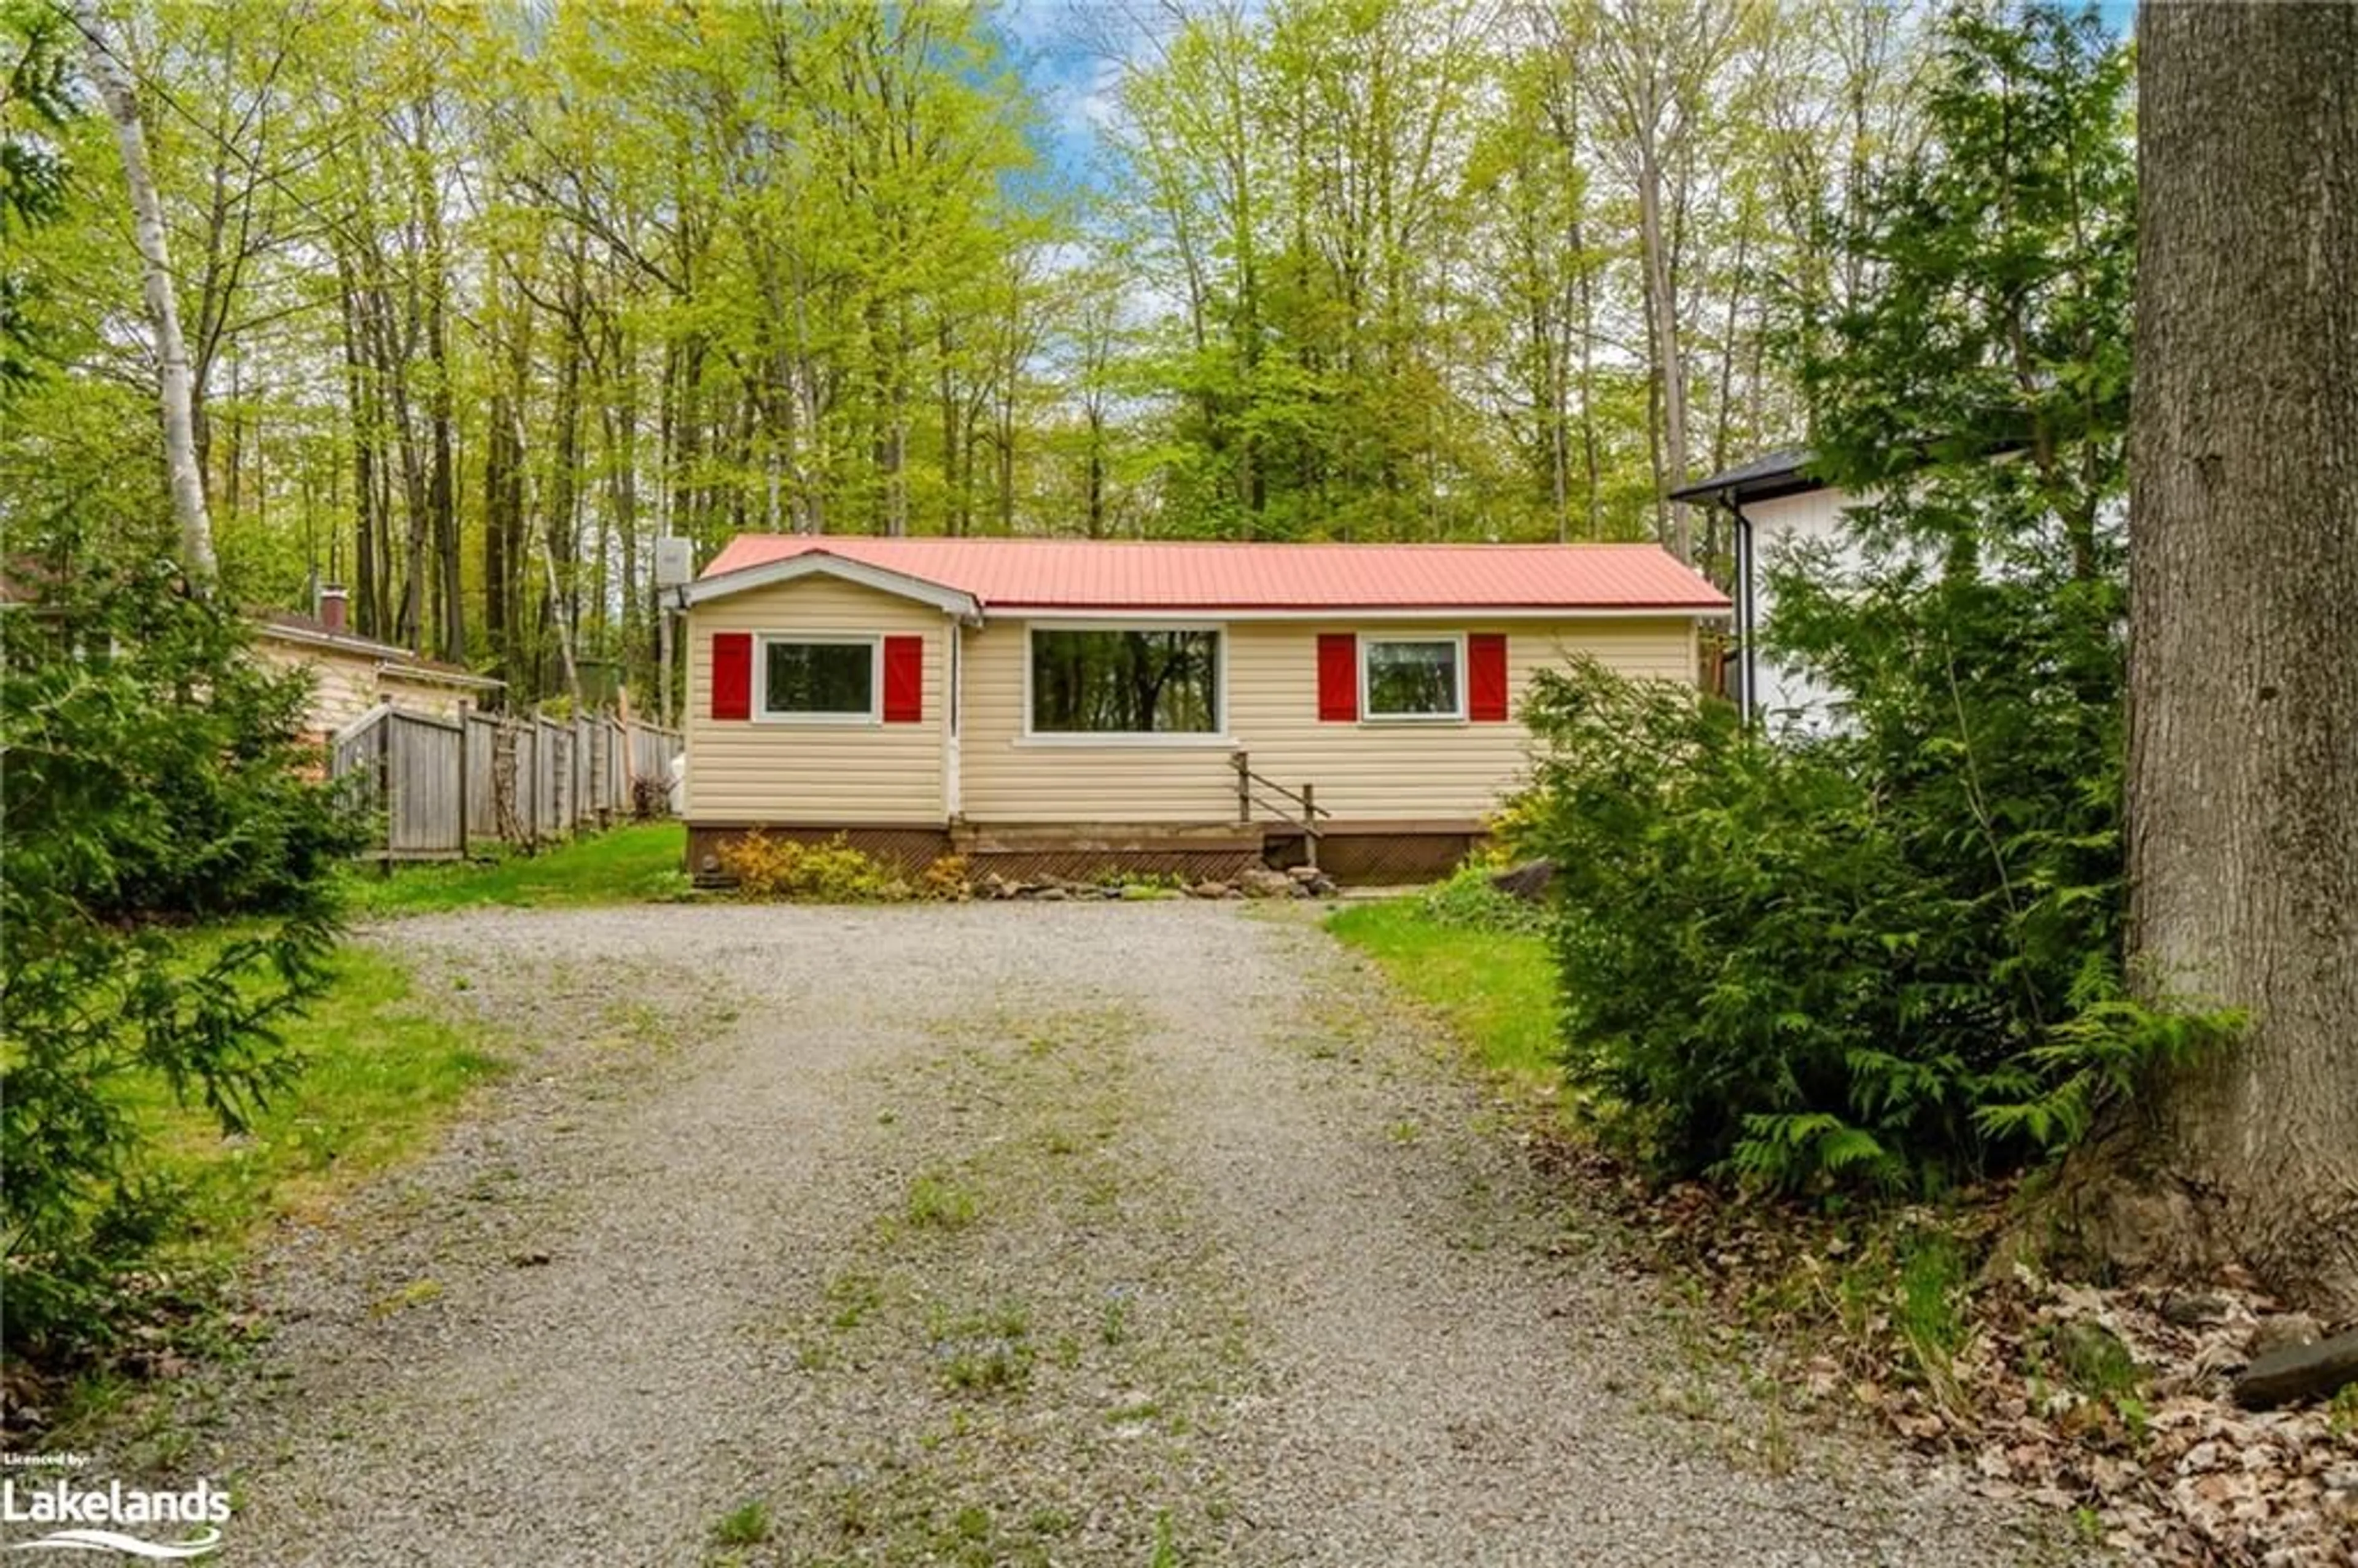 Cottage for 48 Mcarthur Dr, Penetanguishene Ontario L9M 1W9